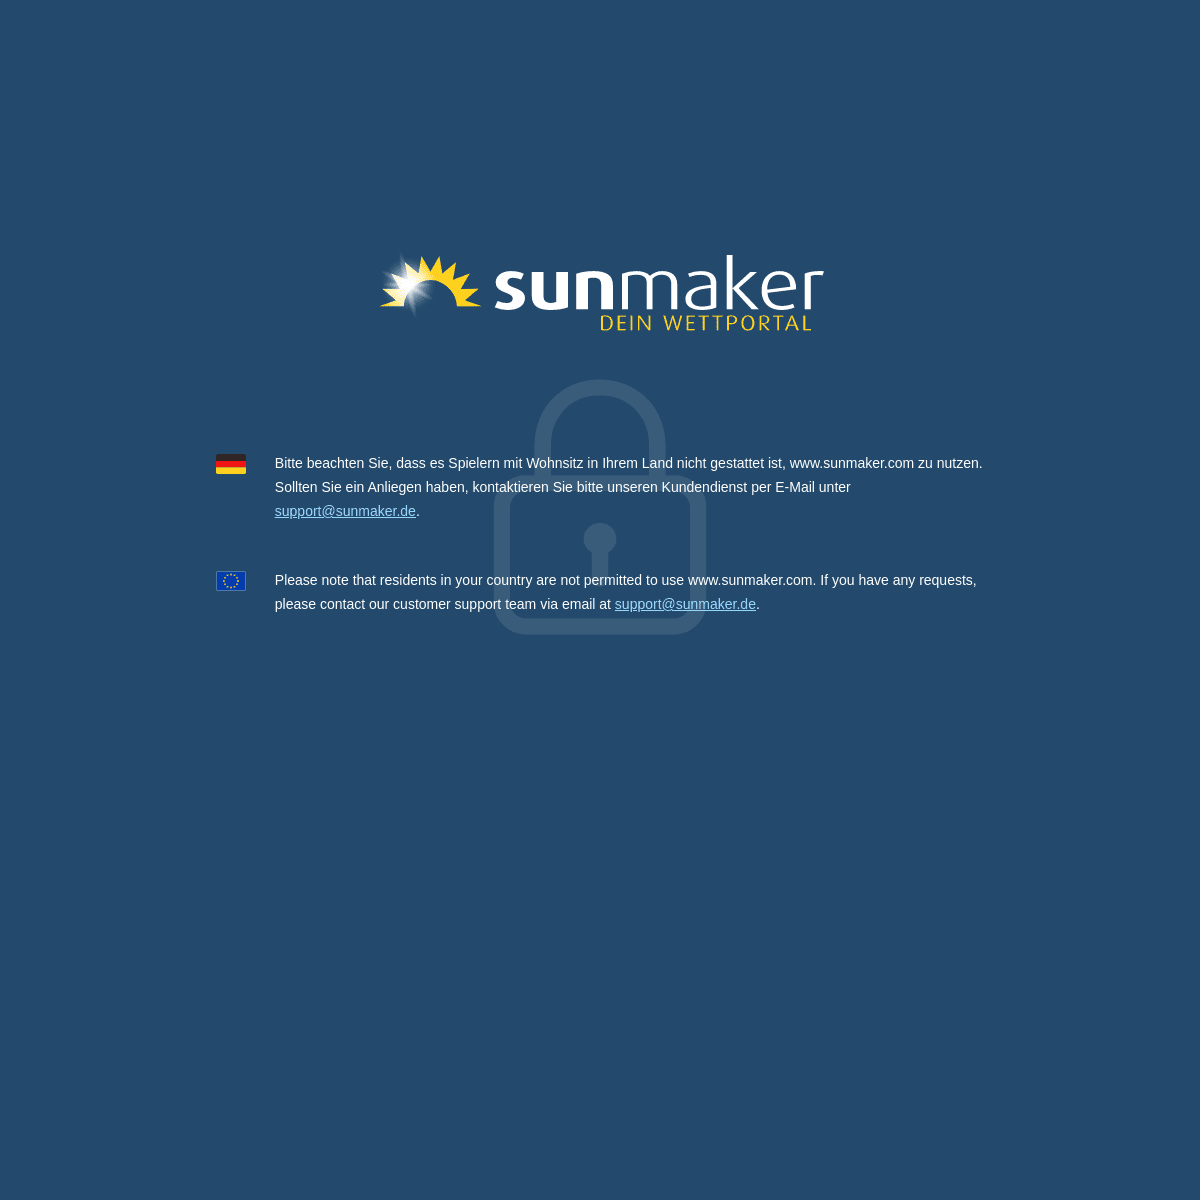 A complete backup of https://sunmaker.de